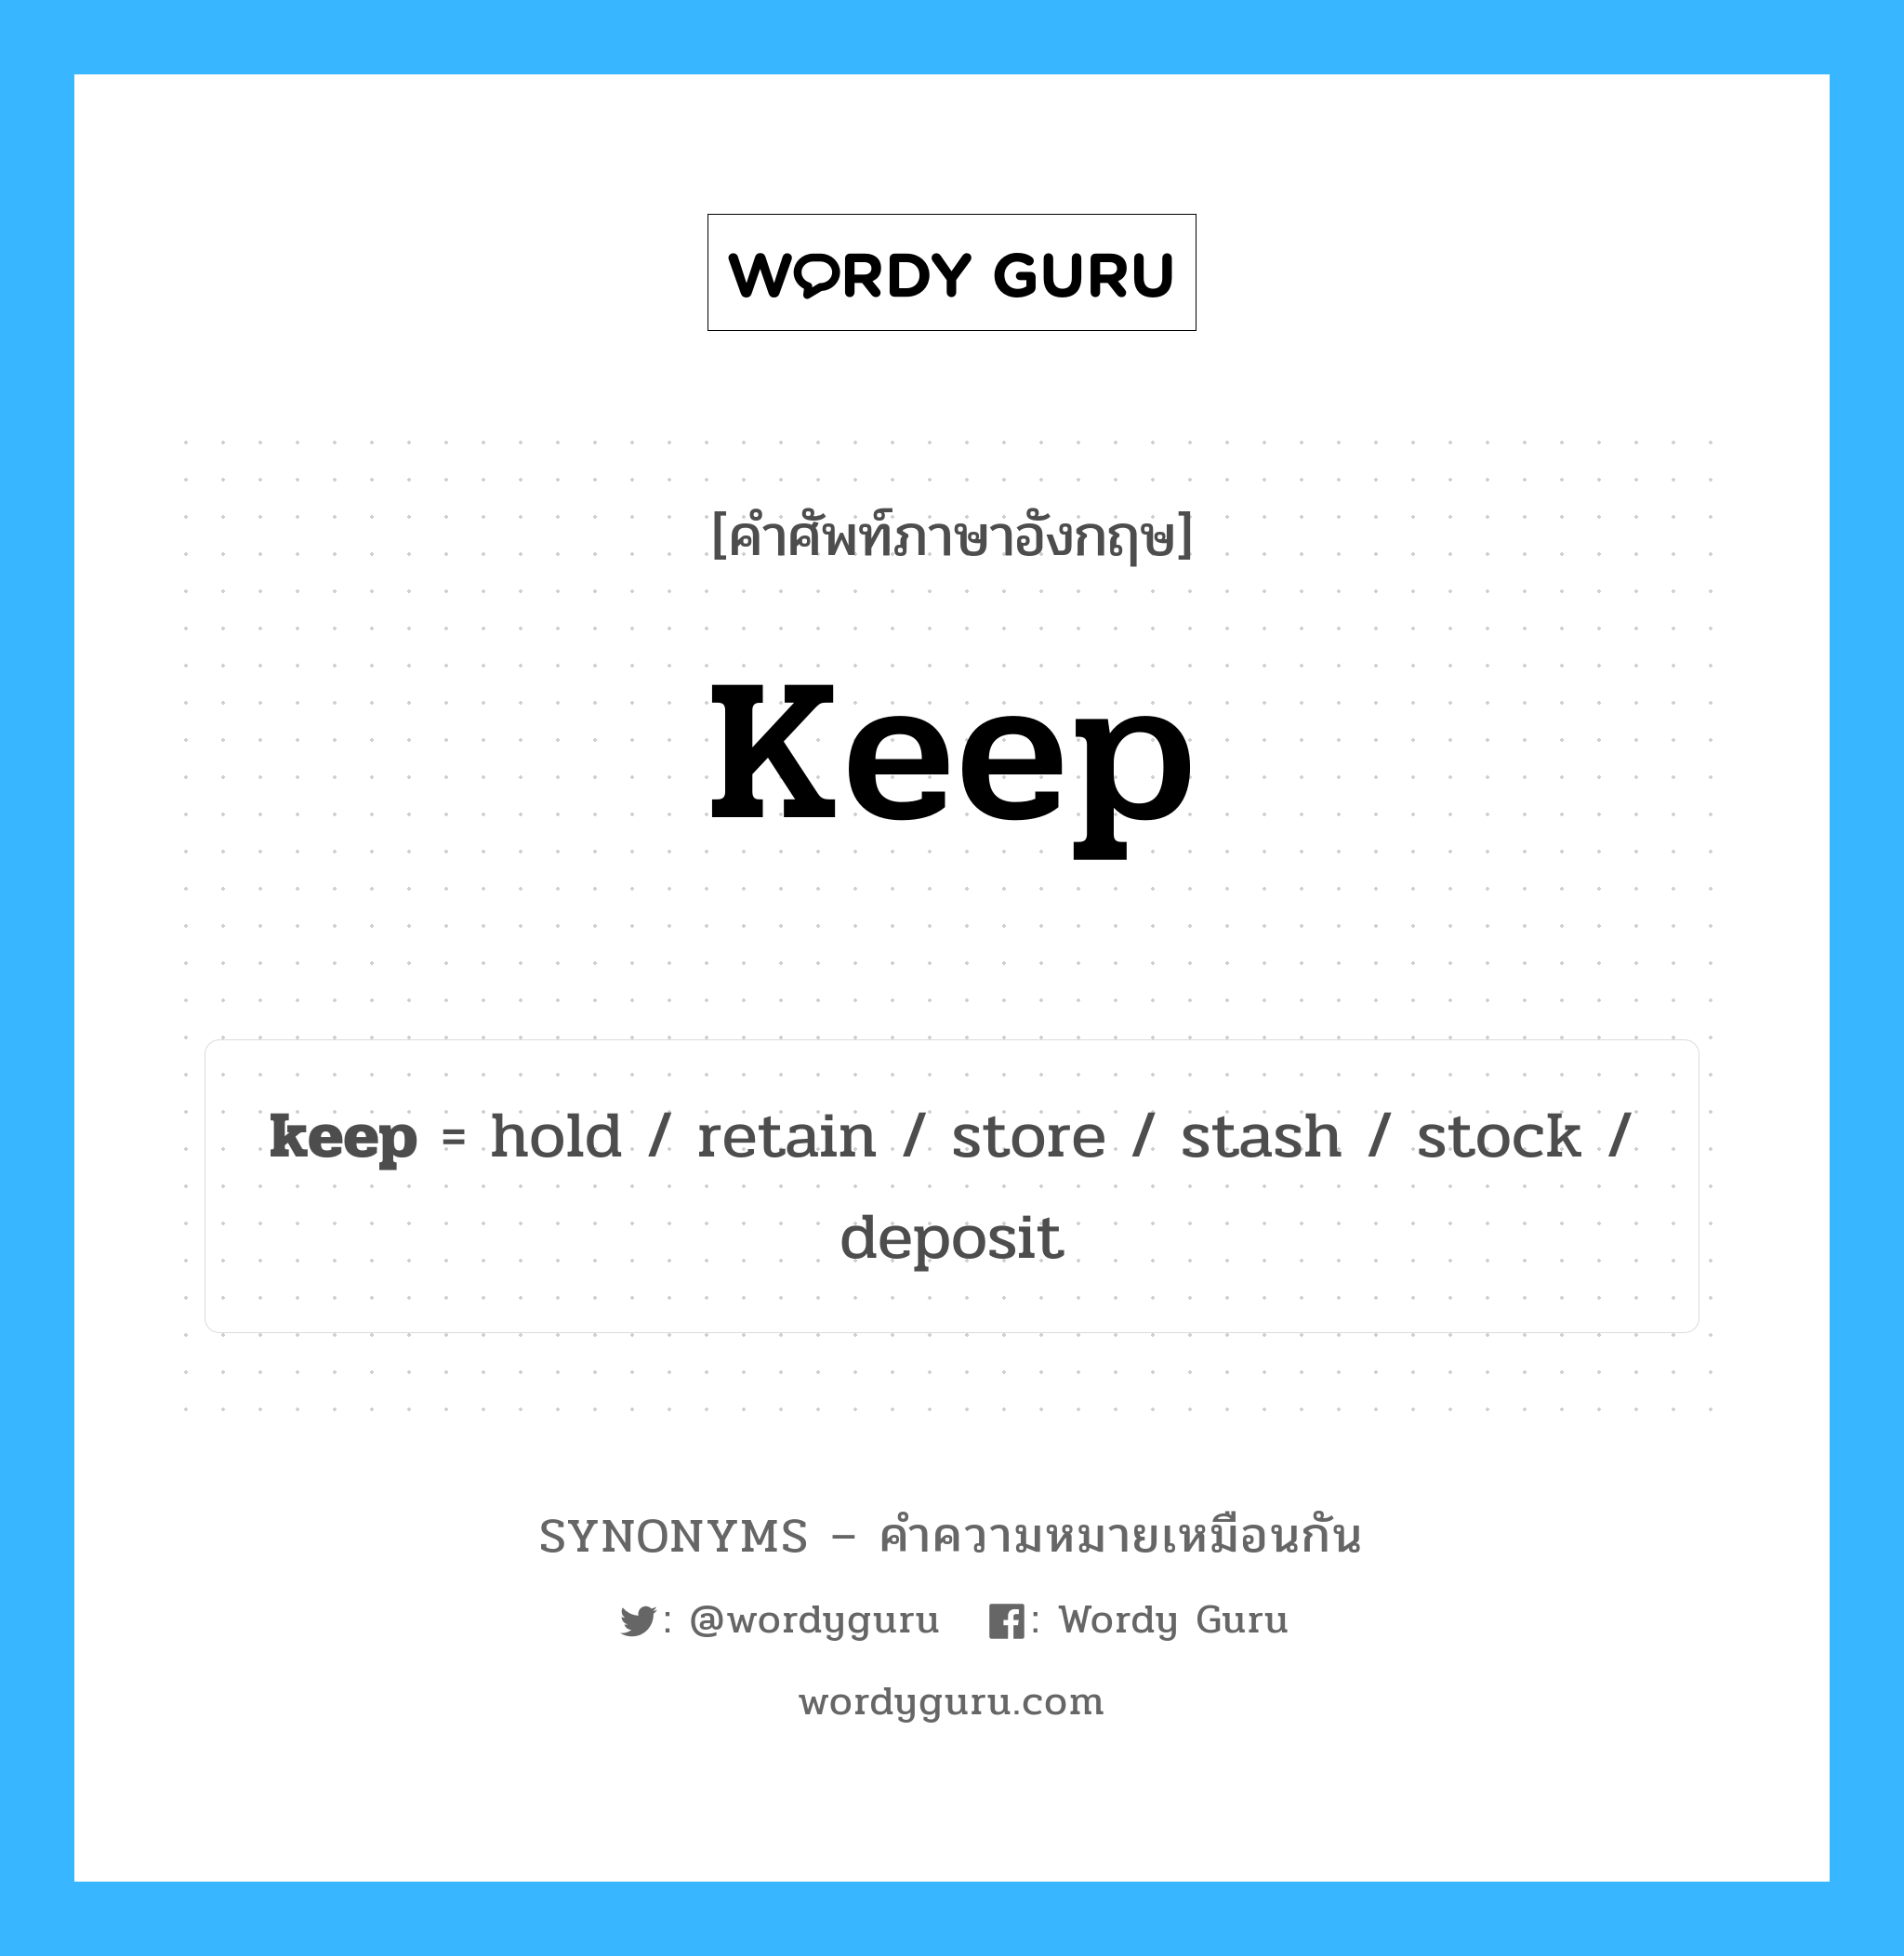 stock เป็นหนึ่งใน keep และมีคำอื่น ๆ อีกดังนี้, คำศัพท์ภาษาอังกฤษ stock ความหมายคล้ายกันกับ keep แปลว่า สต็อก หมวด keep